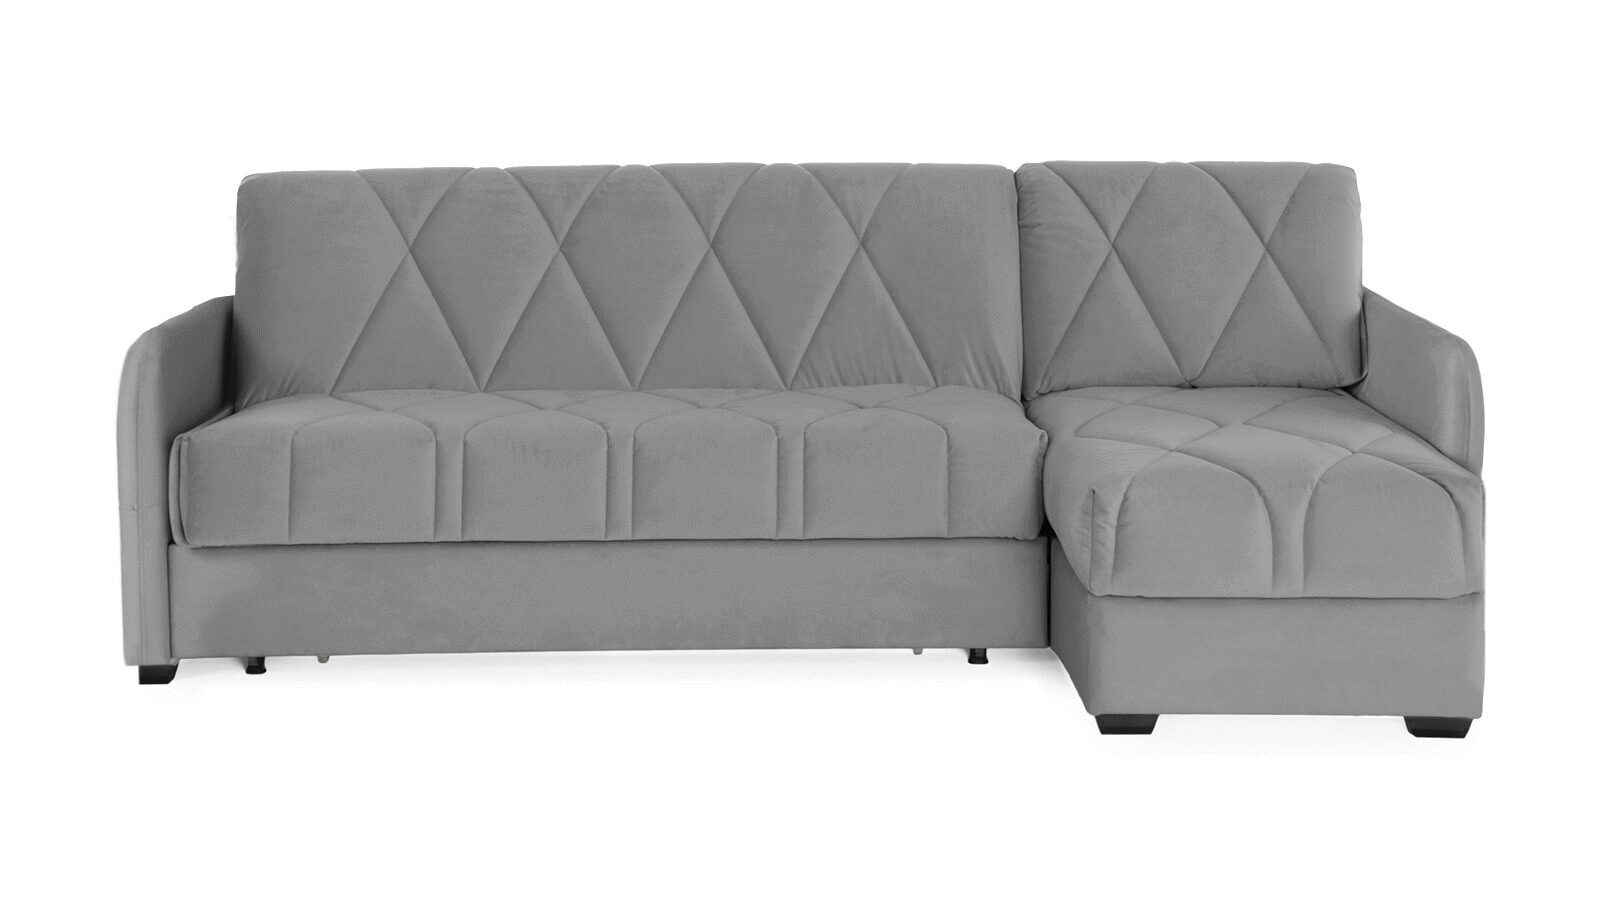 Угловой диван Domo Pro с мягкими подлокотниками, стежка ромб